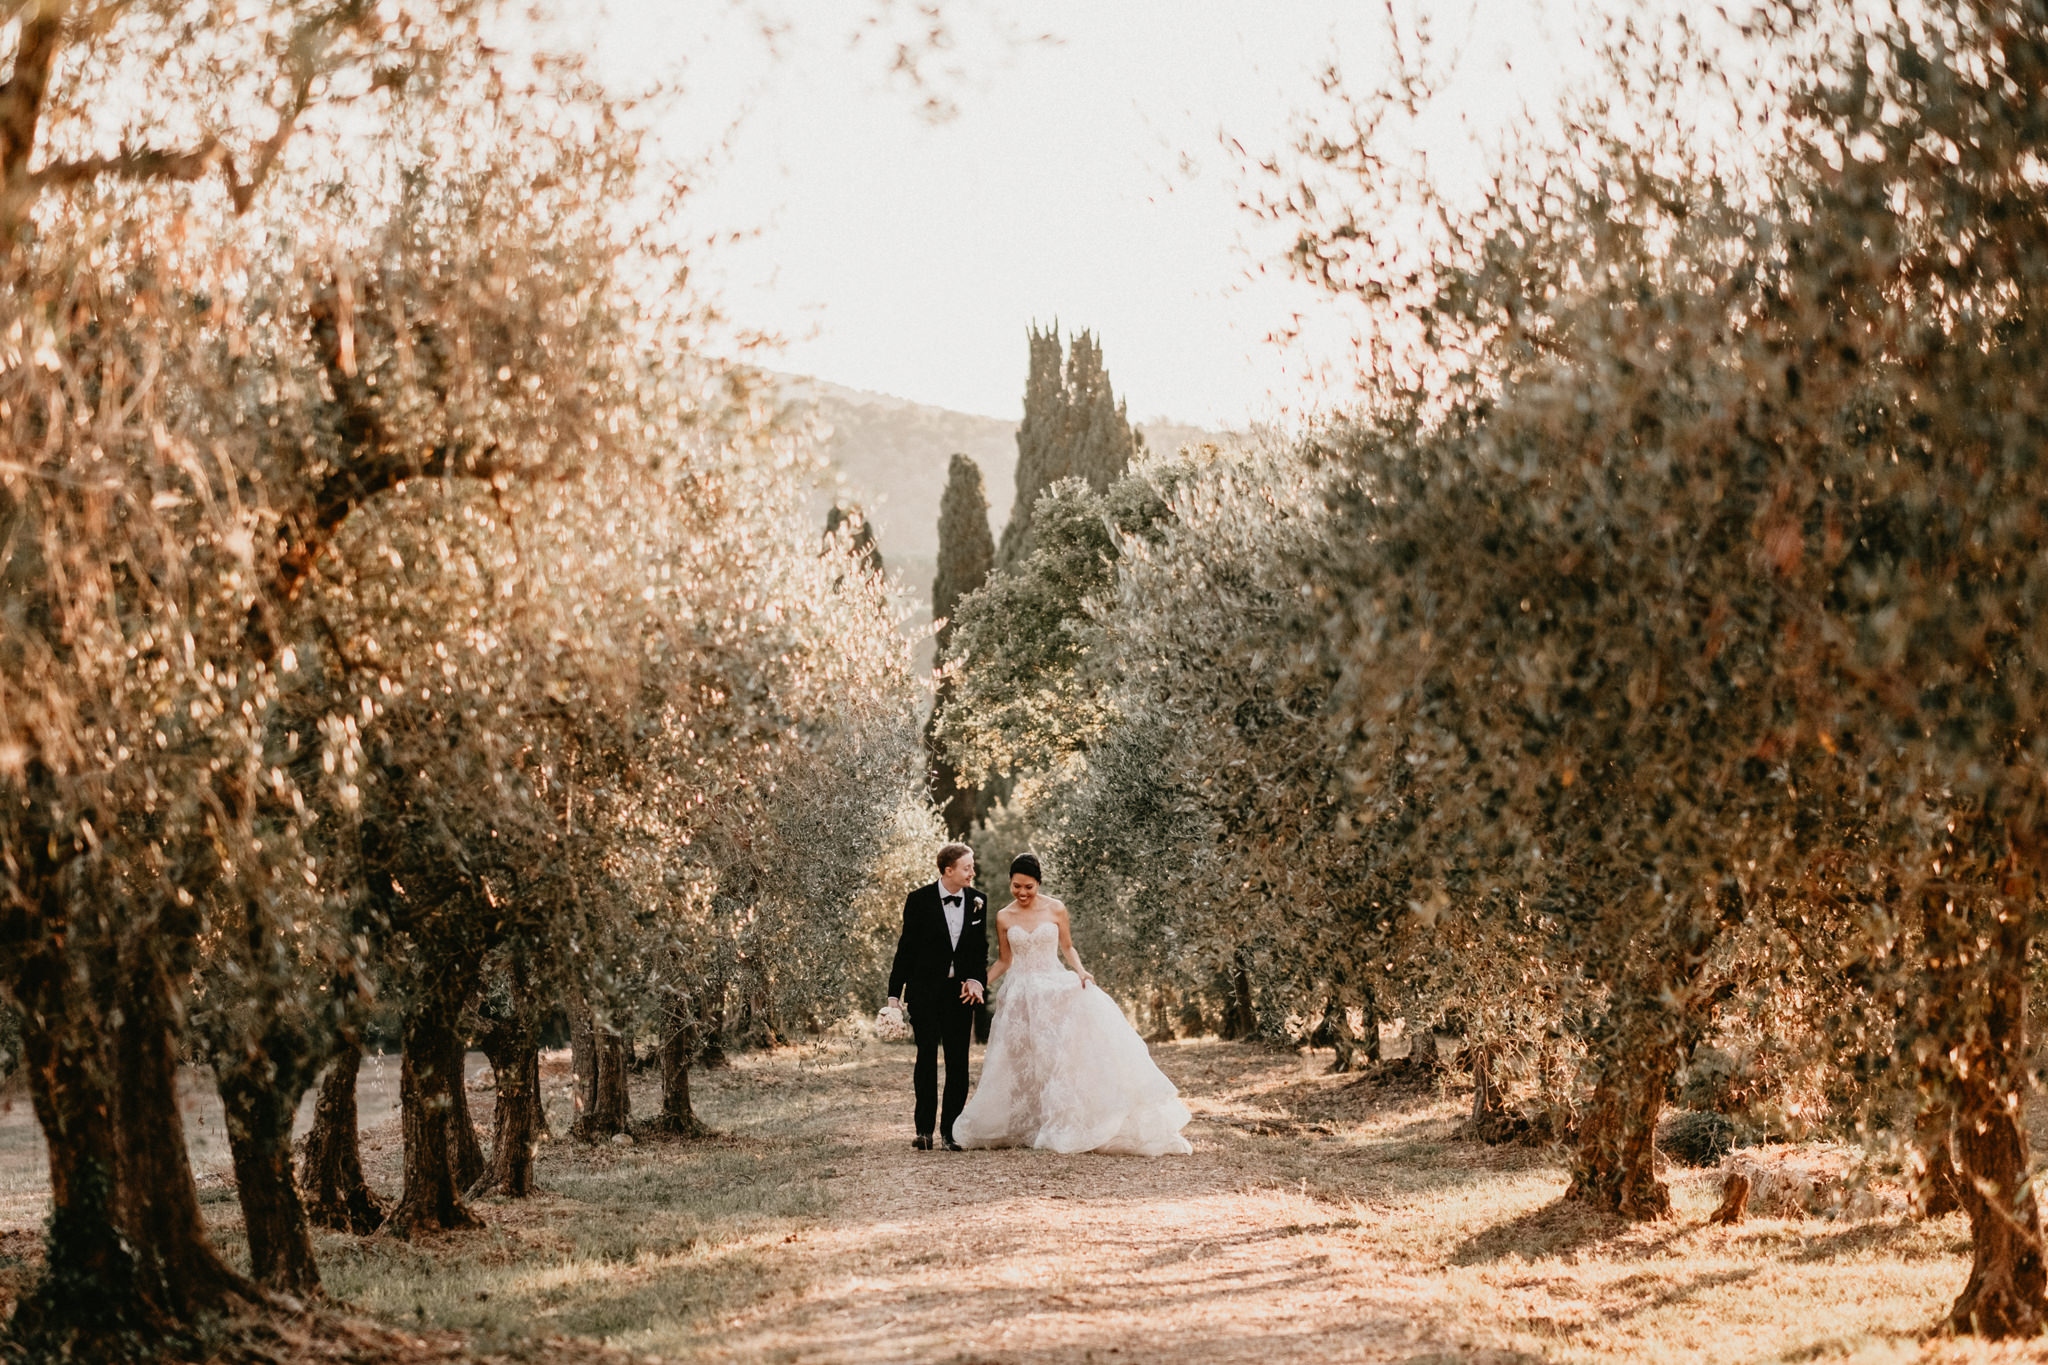 Wedding at Borgo Stomennano, Tuscany - Portraits